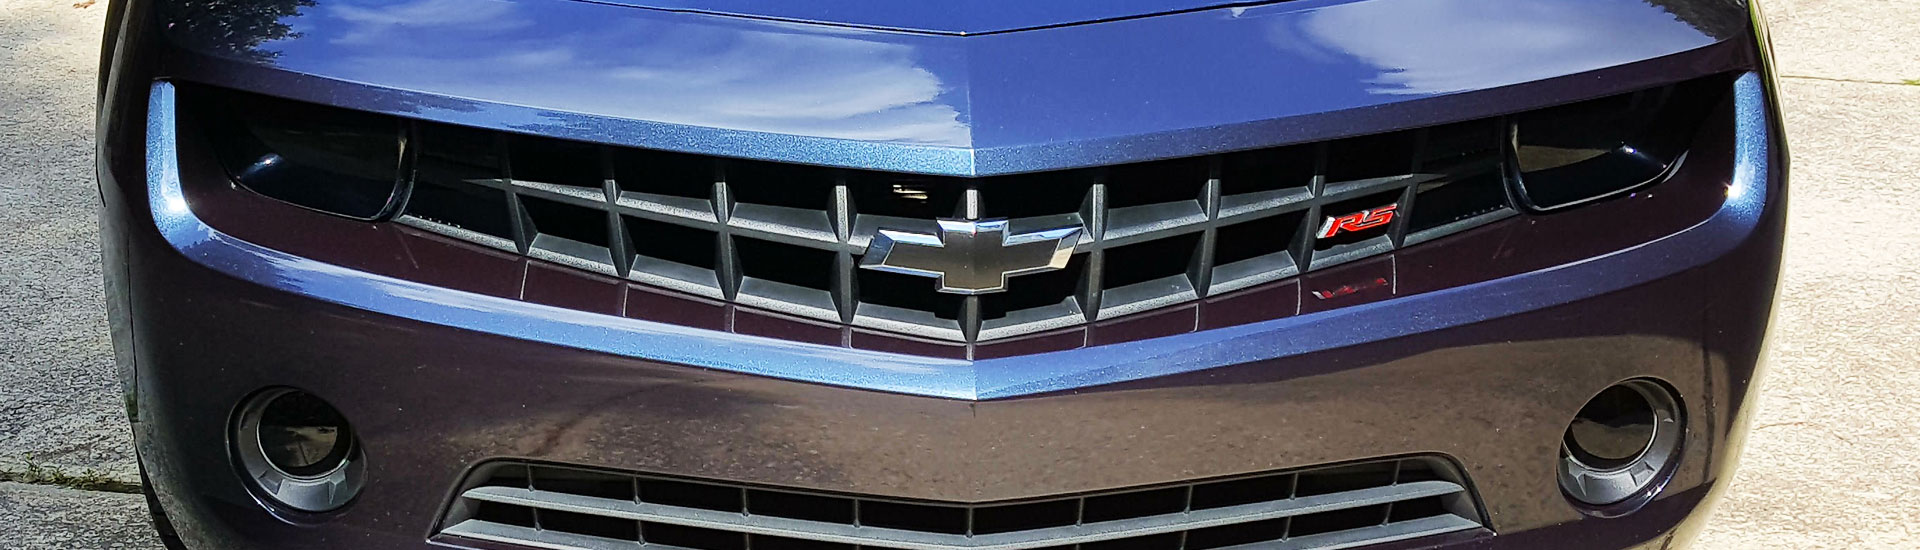 Chevrolet Camaro Headlight Tint Covers